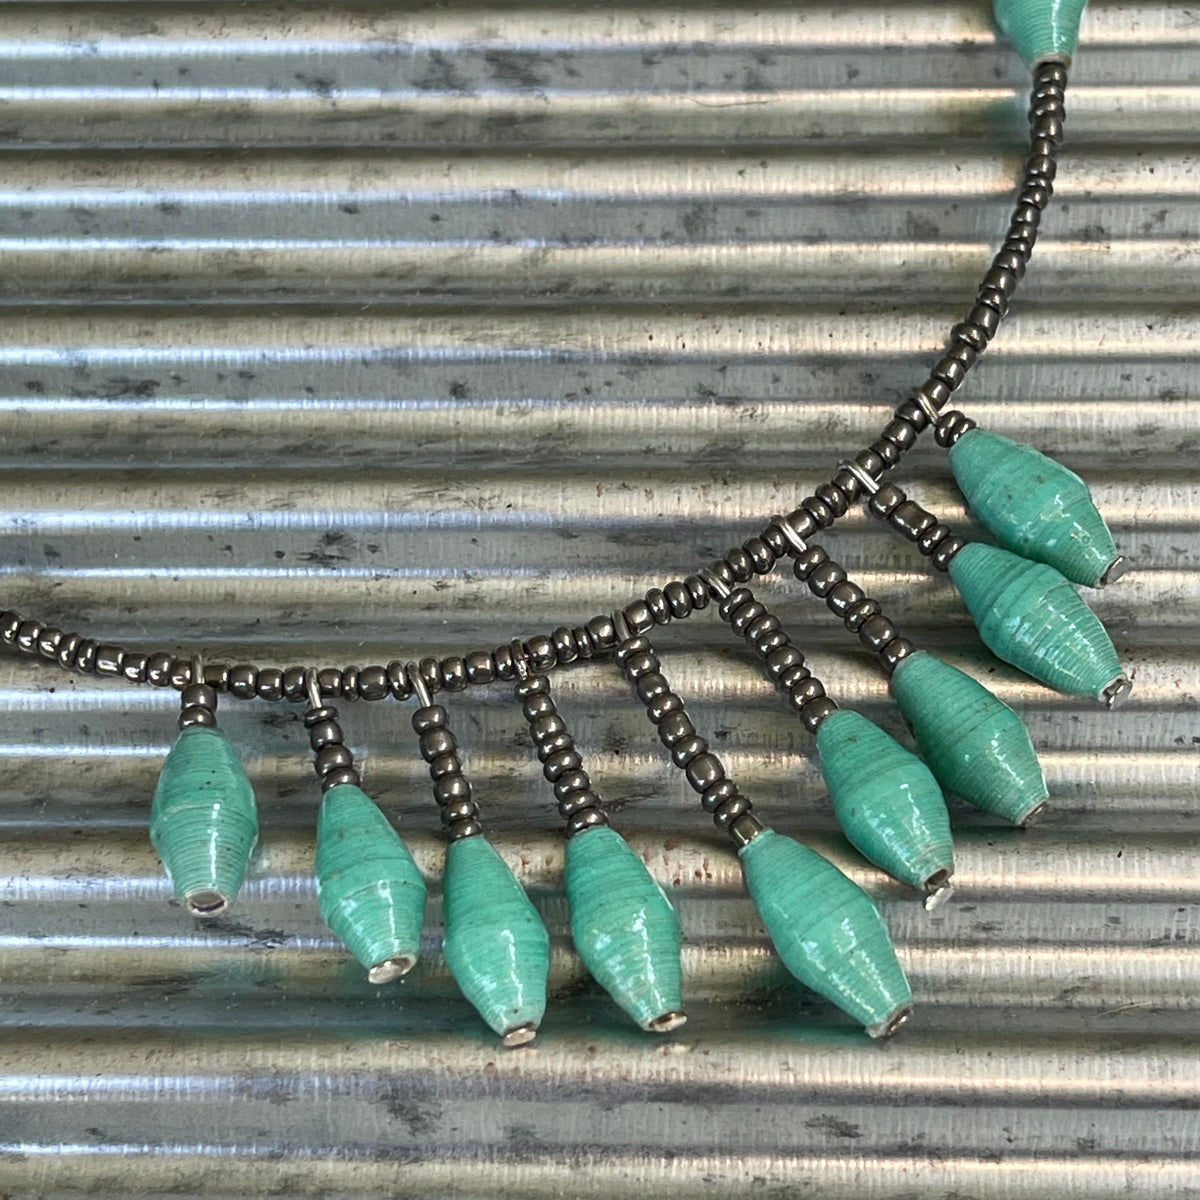 Banda Darling Handmade Monochromatic Beaded Bib Design with Silver Chain (Mint Green)